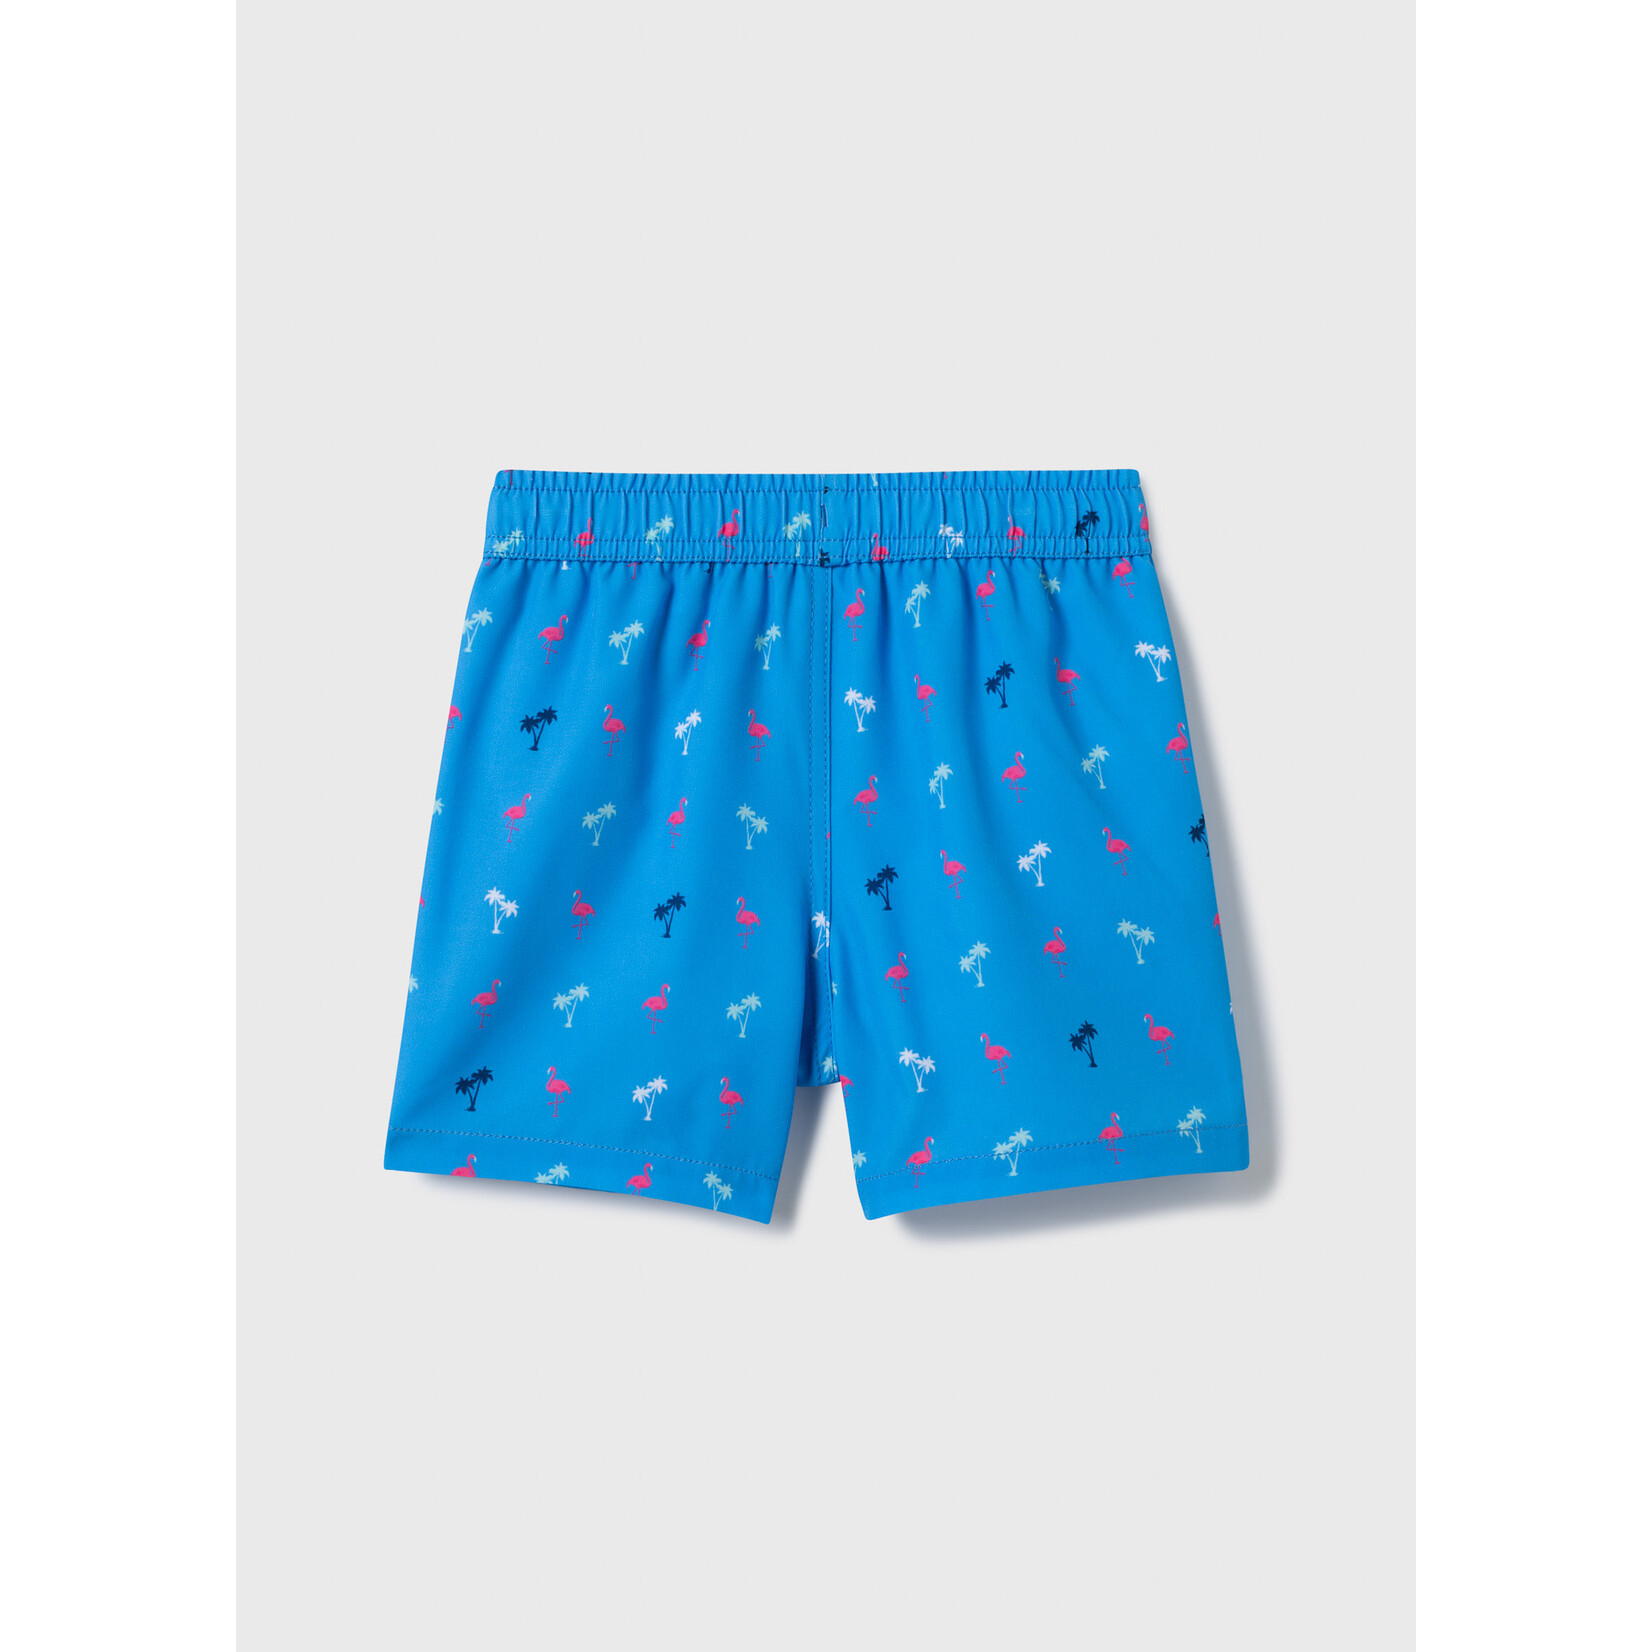 Northcoast NORTHCOAST -  Blue swimming shorts with flamingo and palm tree print